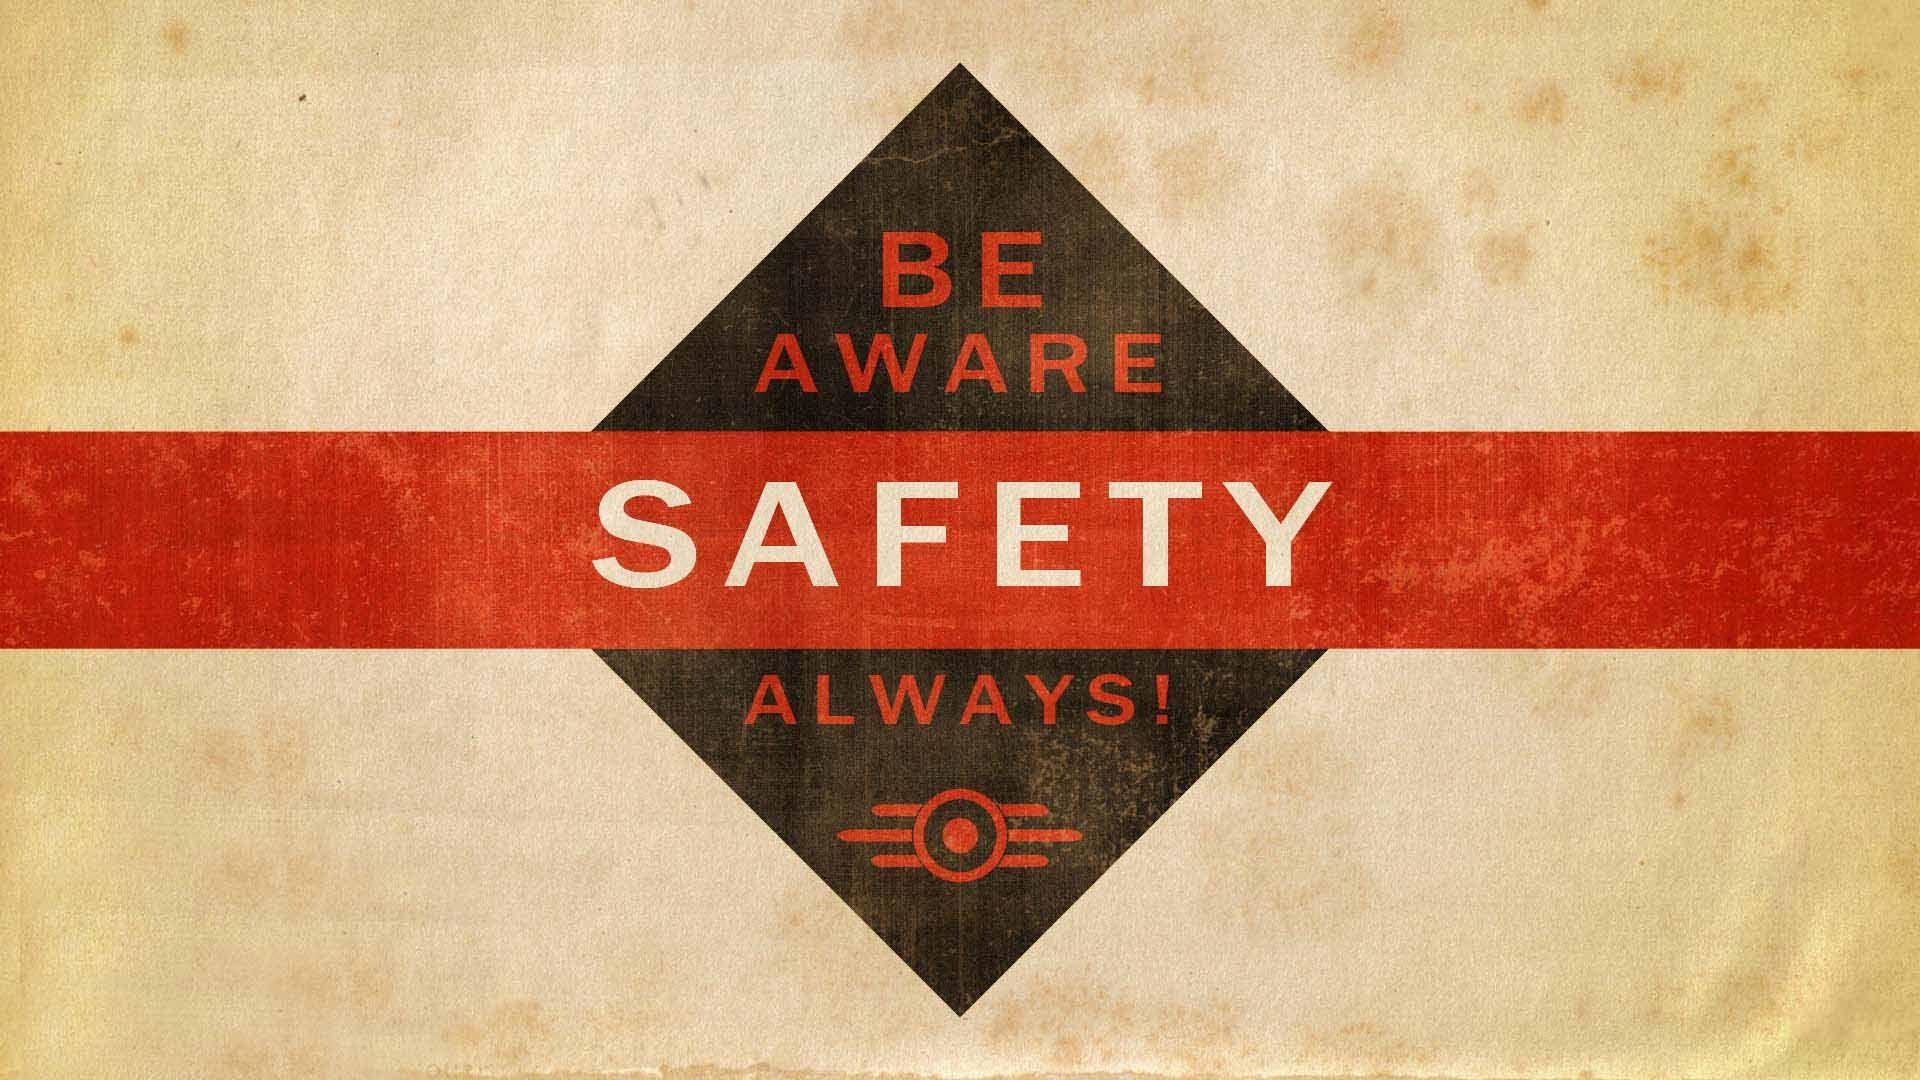 Be Aware Safety Always. HD Motivation Wallpaper for Mobile and Desktop